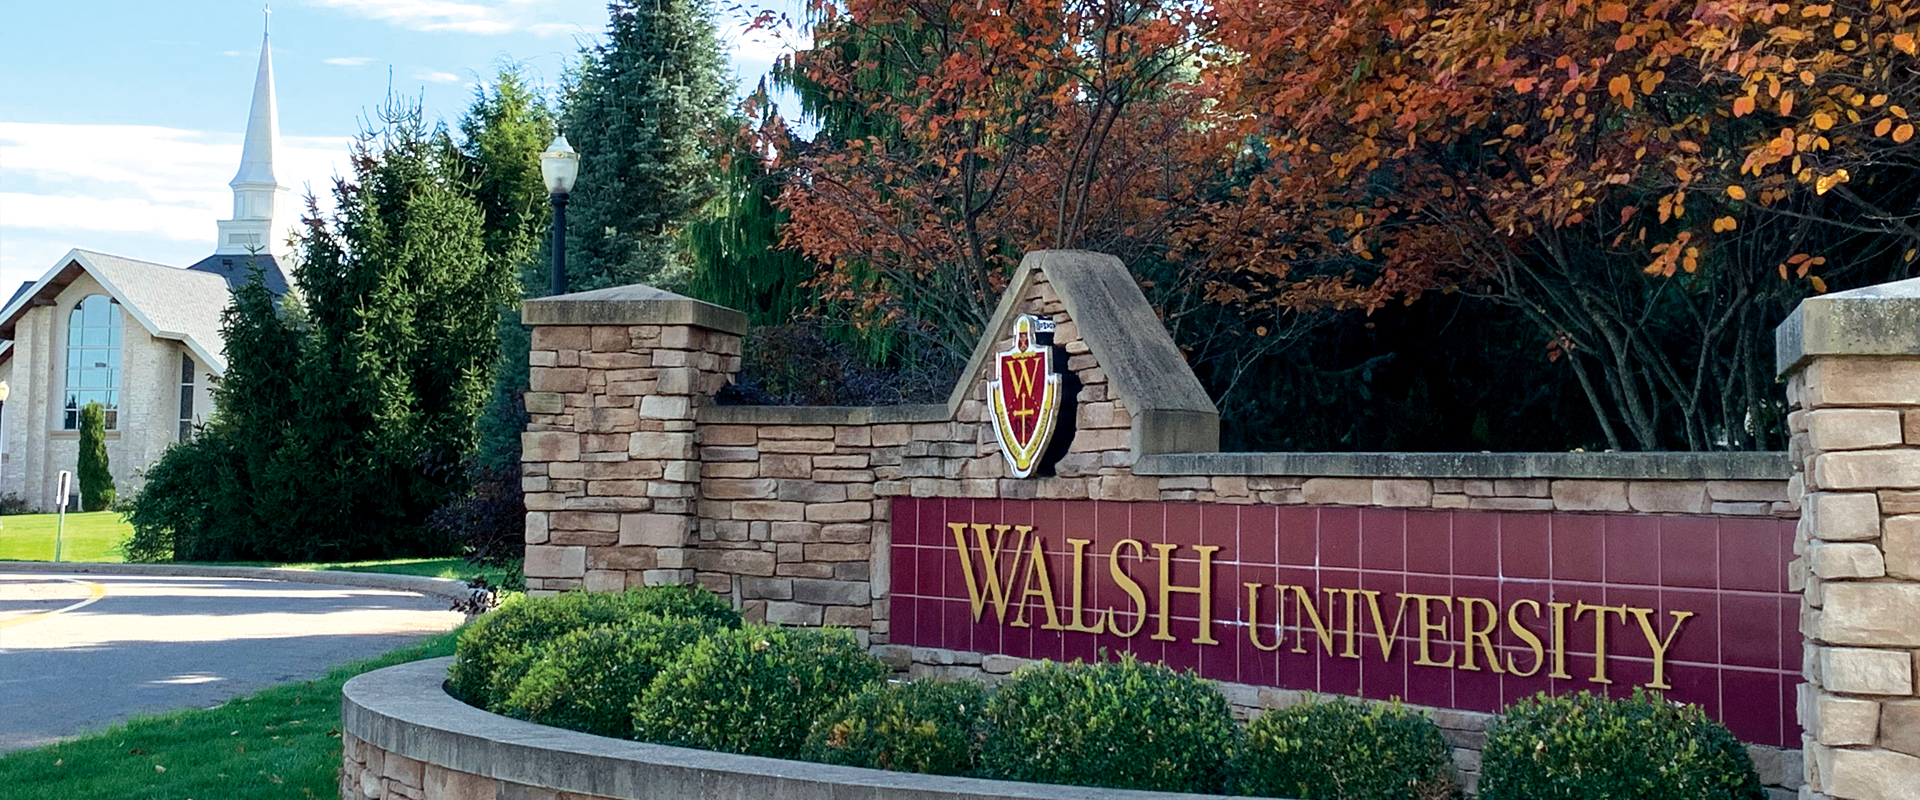 Walsh University Entrance